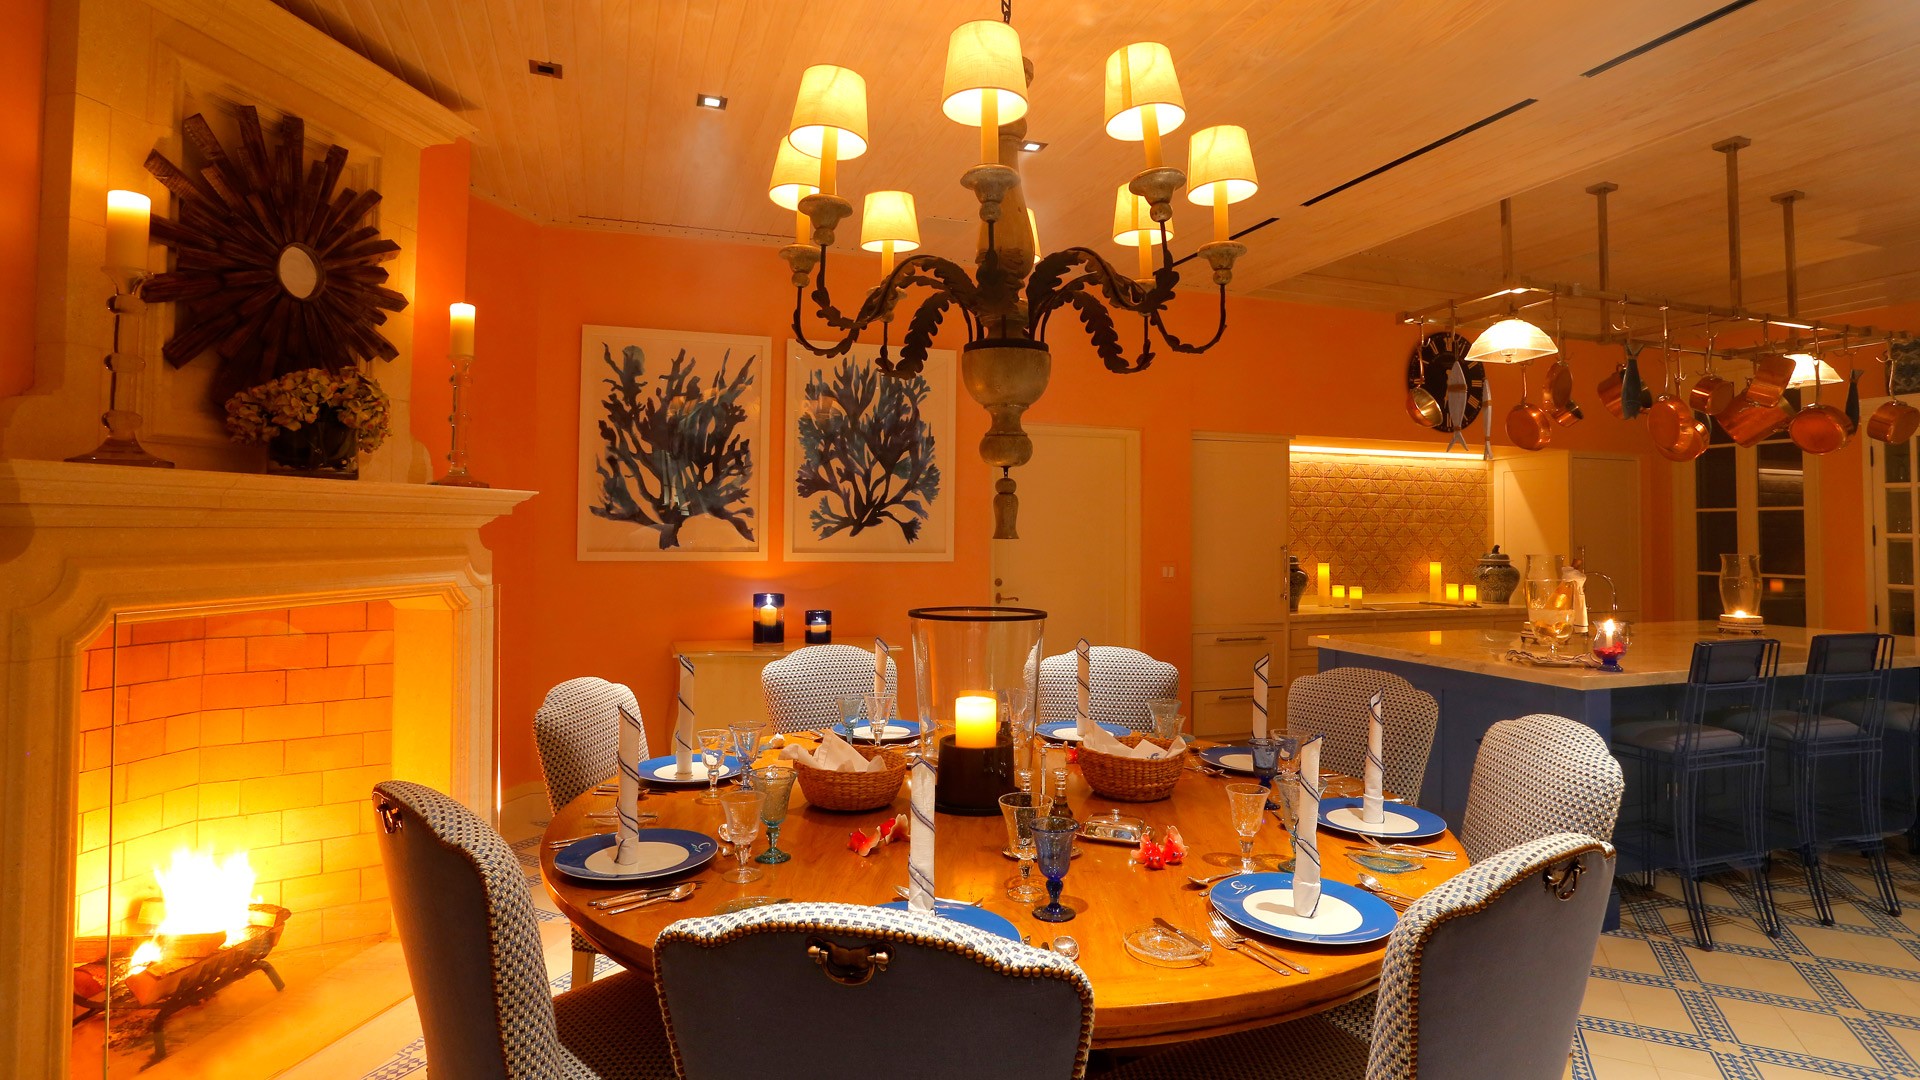 diningroom2014